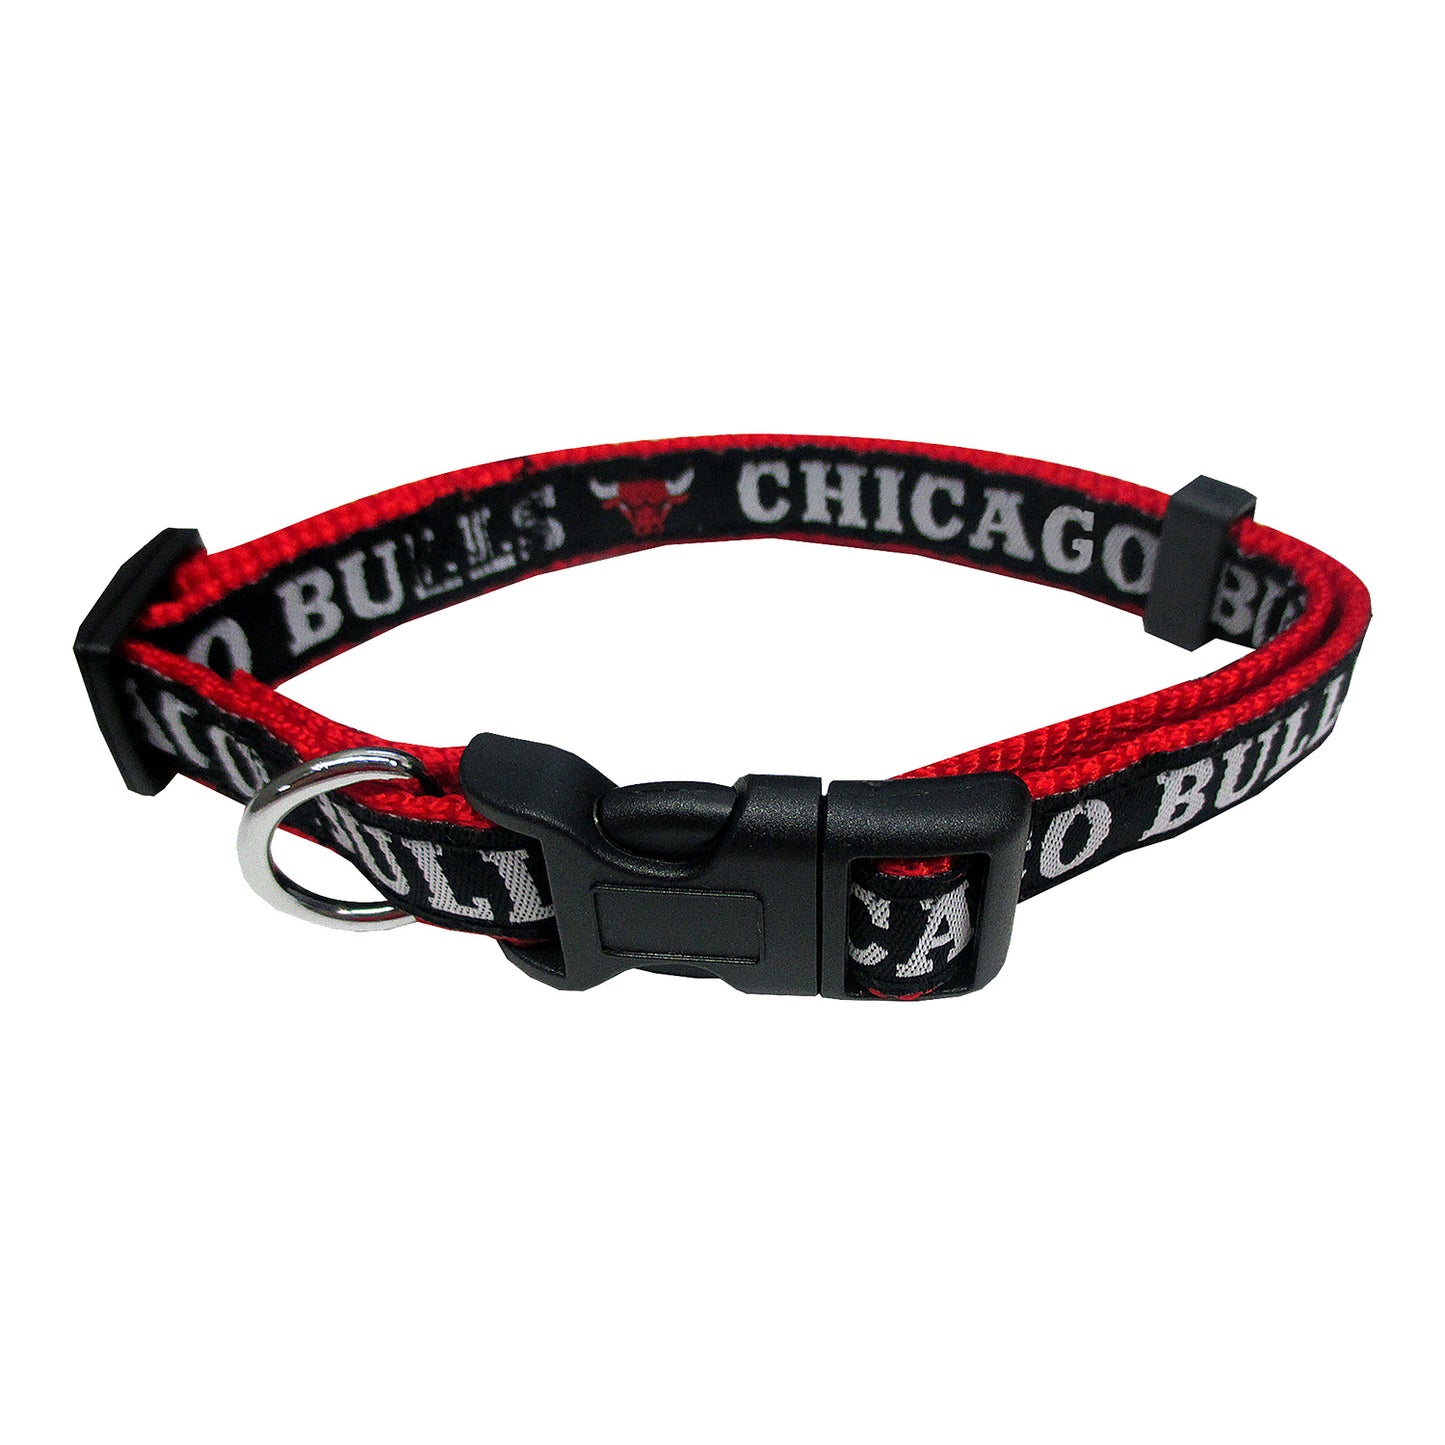 Chicago Bulls Pet Collar - front view